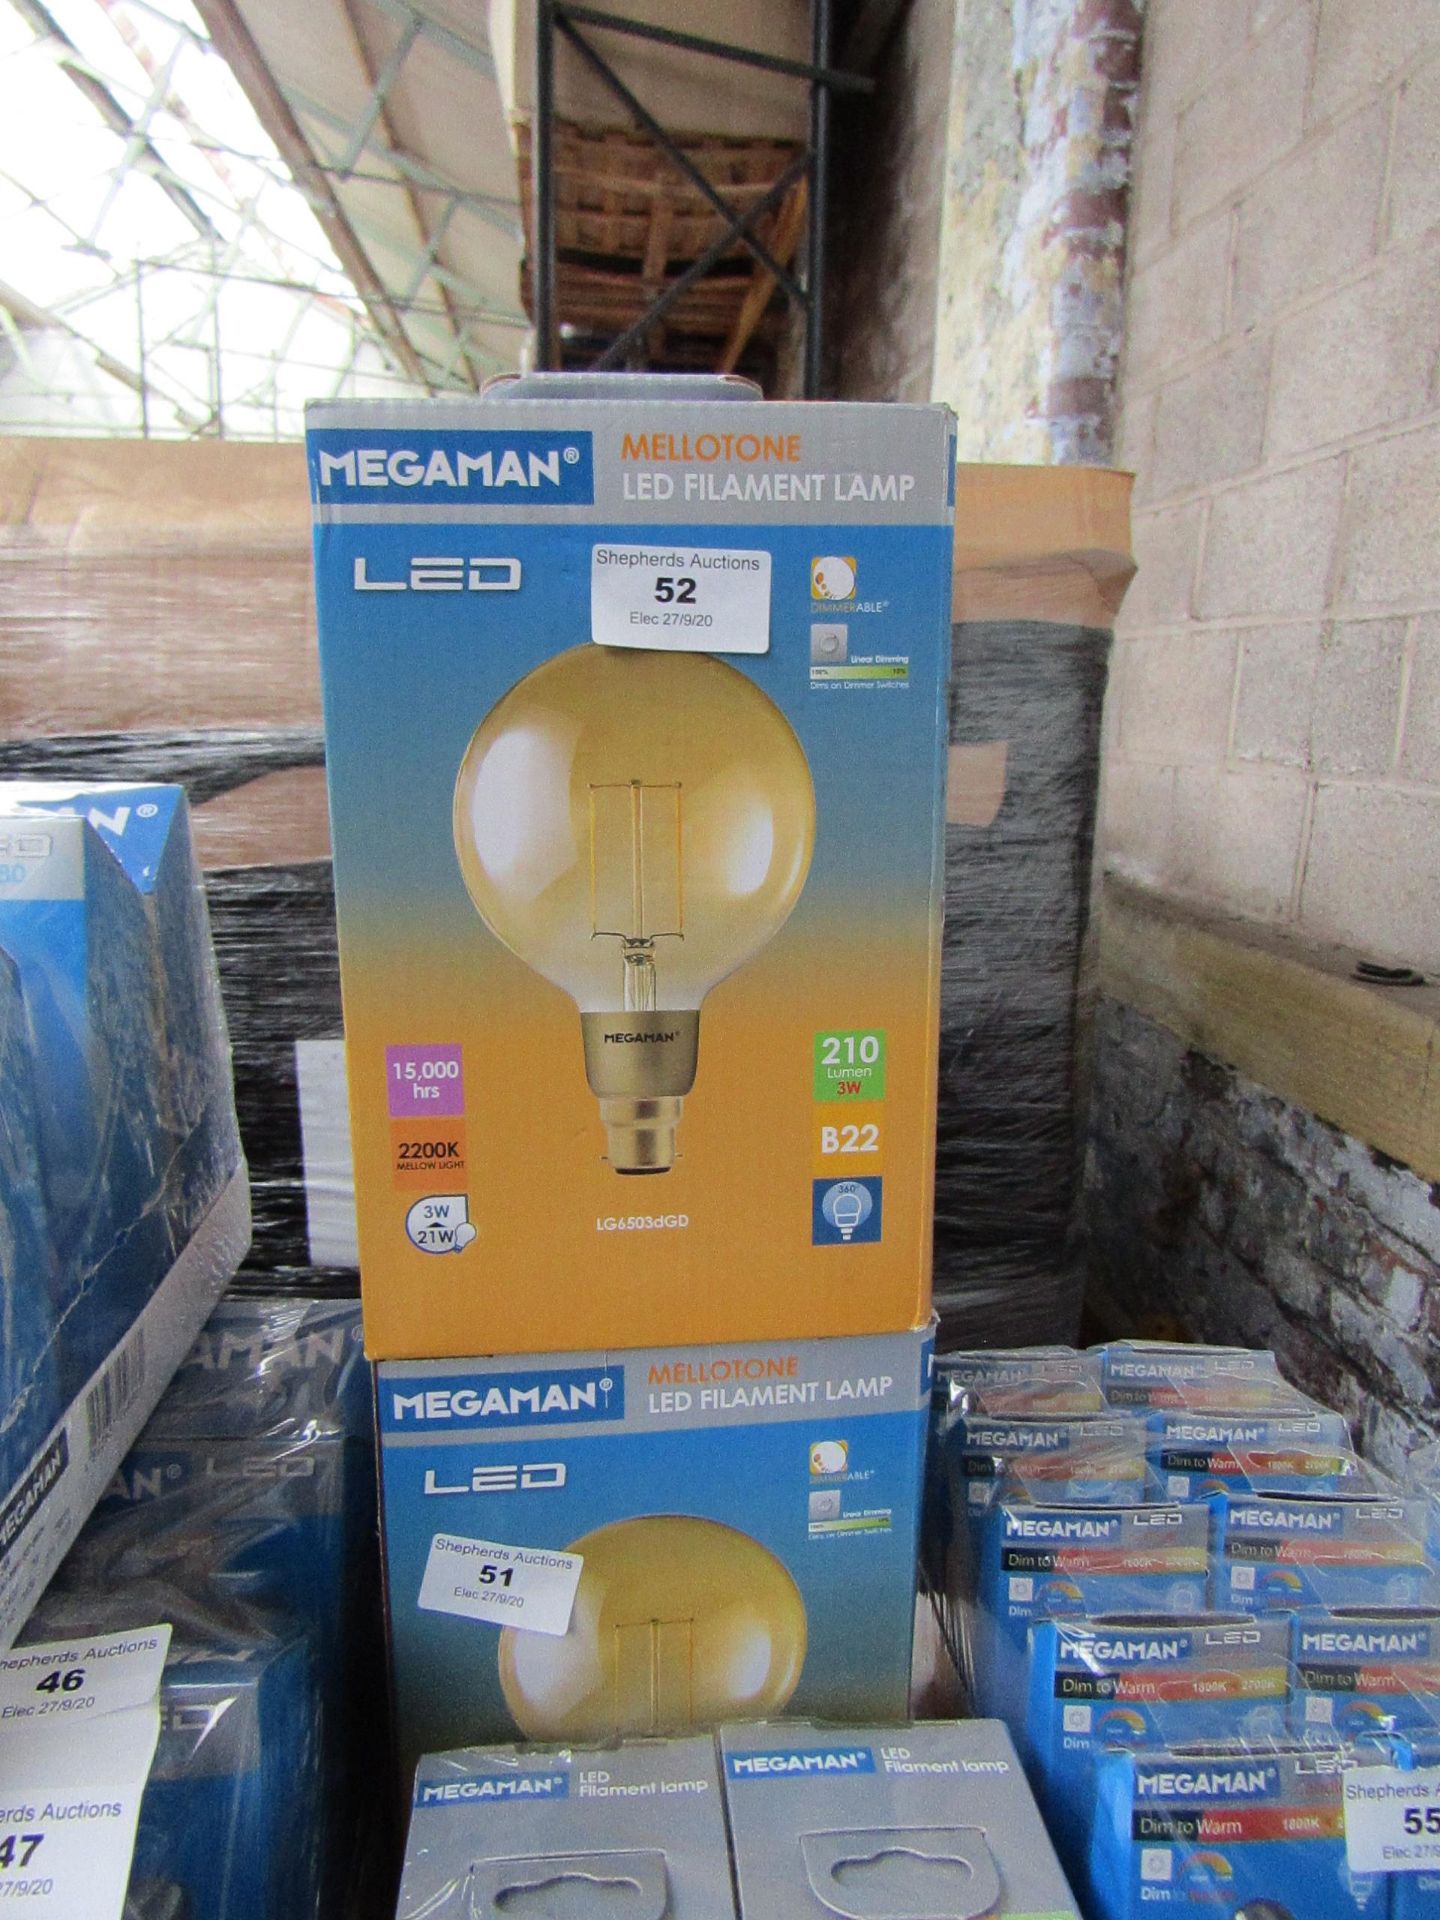 1x Megaman LED Flament bulb, new and boxed. 15,000Hrs / B22 / 210 Lumens